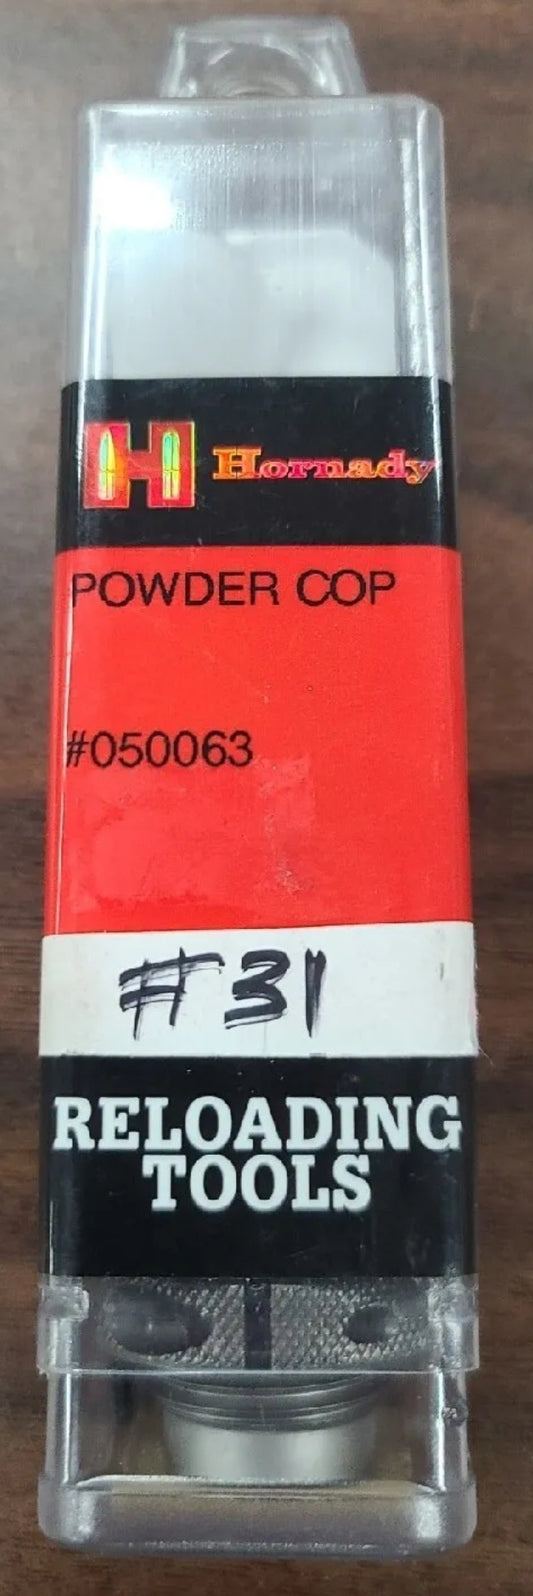 Hornady Powder Cop Measure Powder Types Silver Matte #050063 Reloading Tool